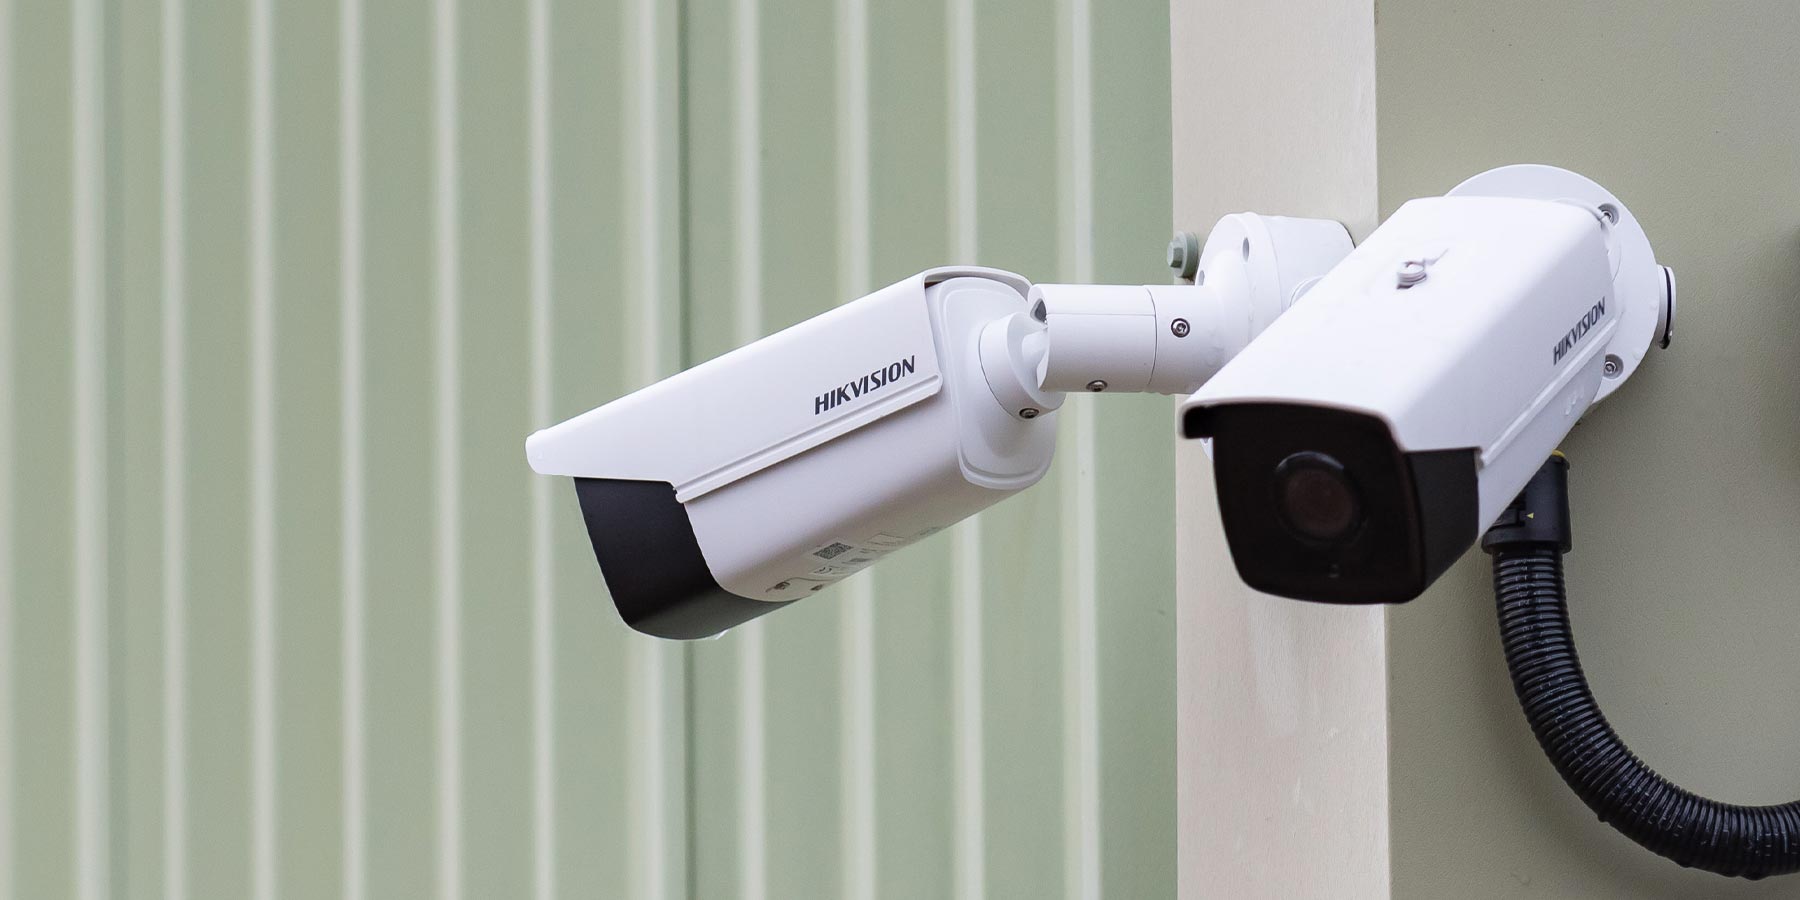 benefits of surveillance cameras